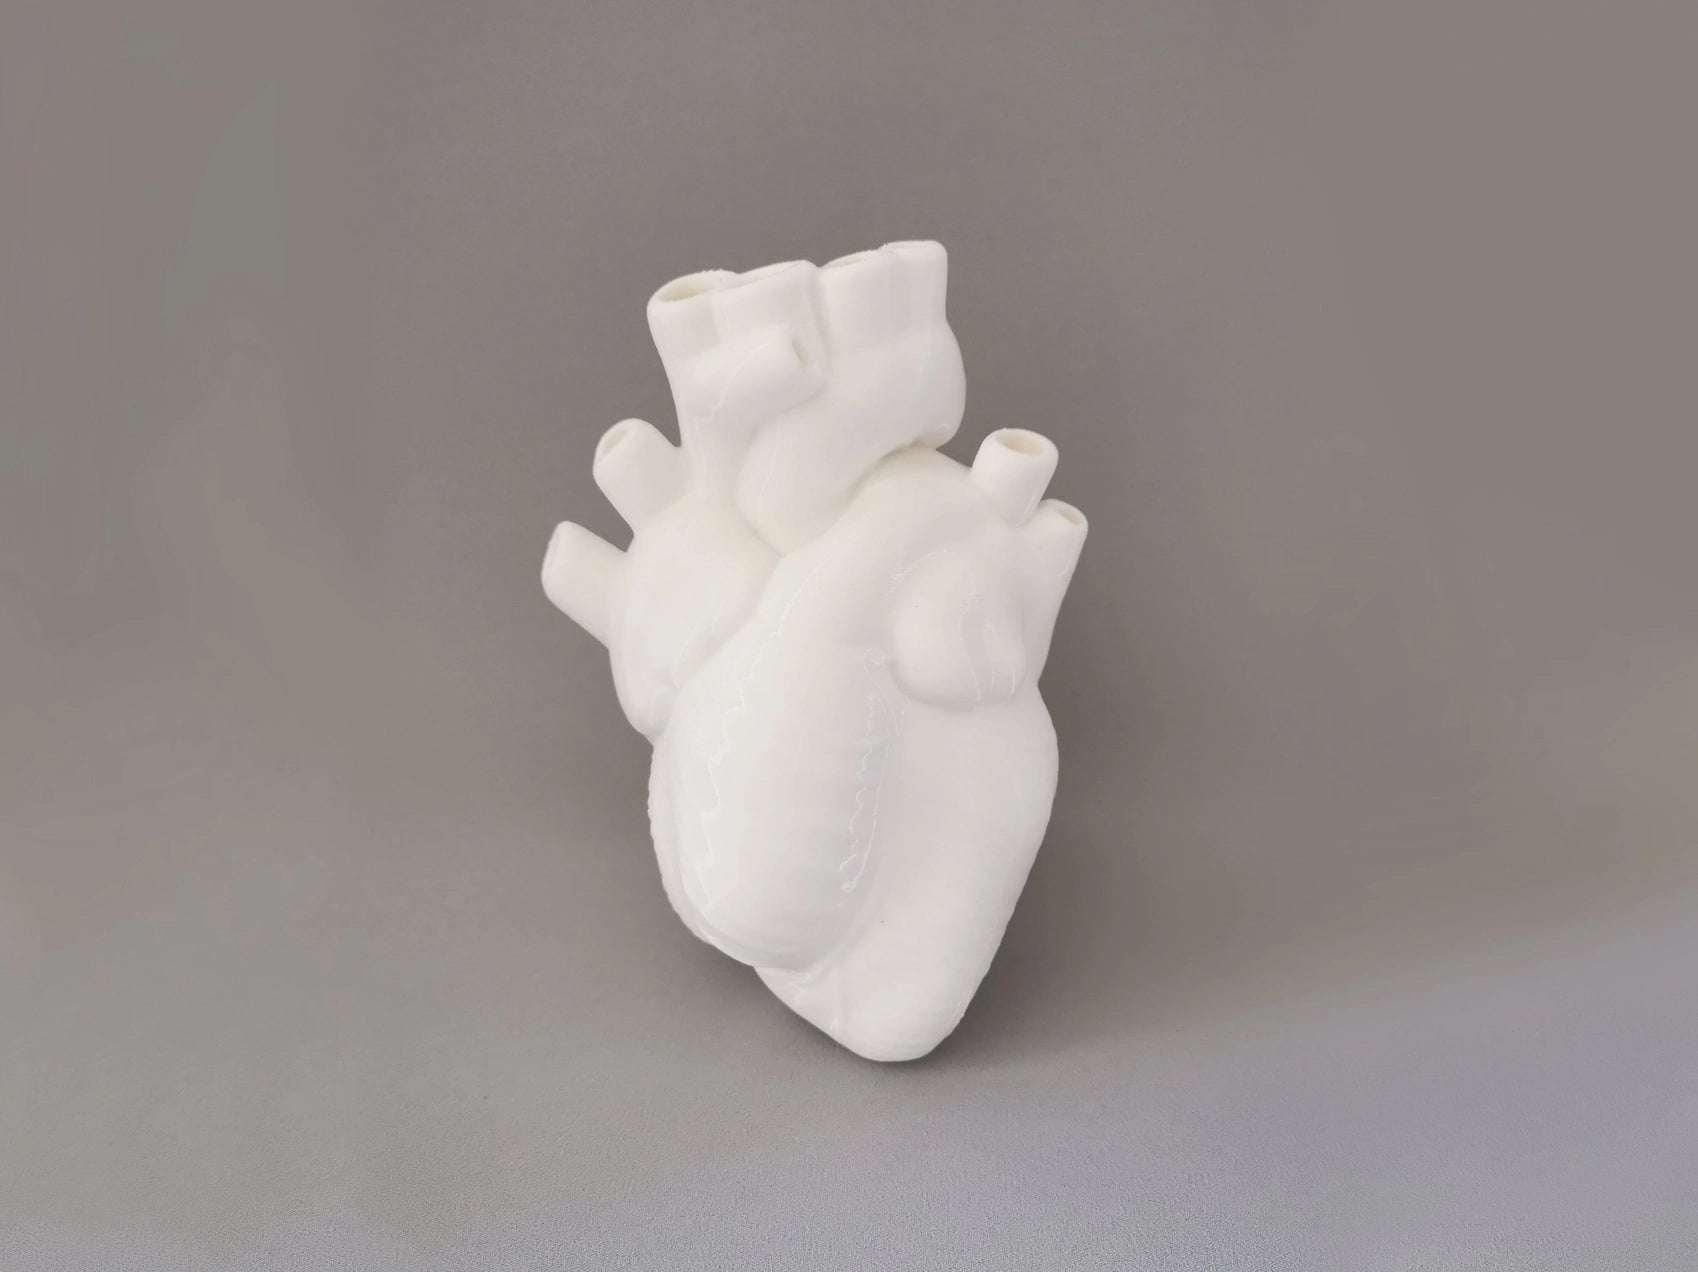 Decorative anatomical heart